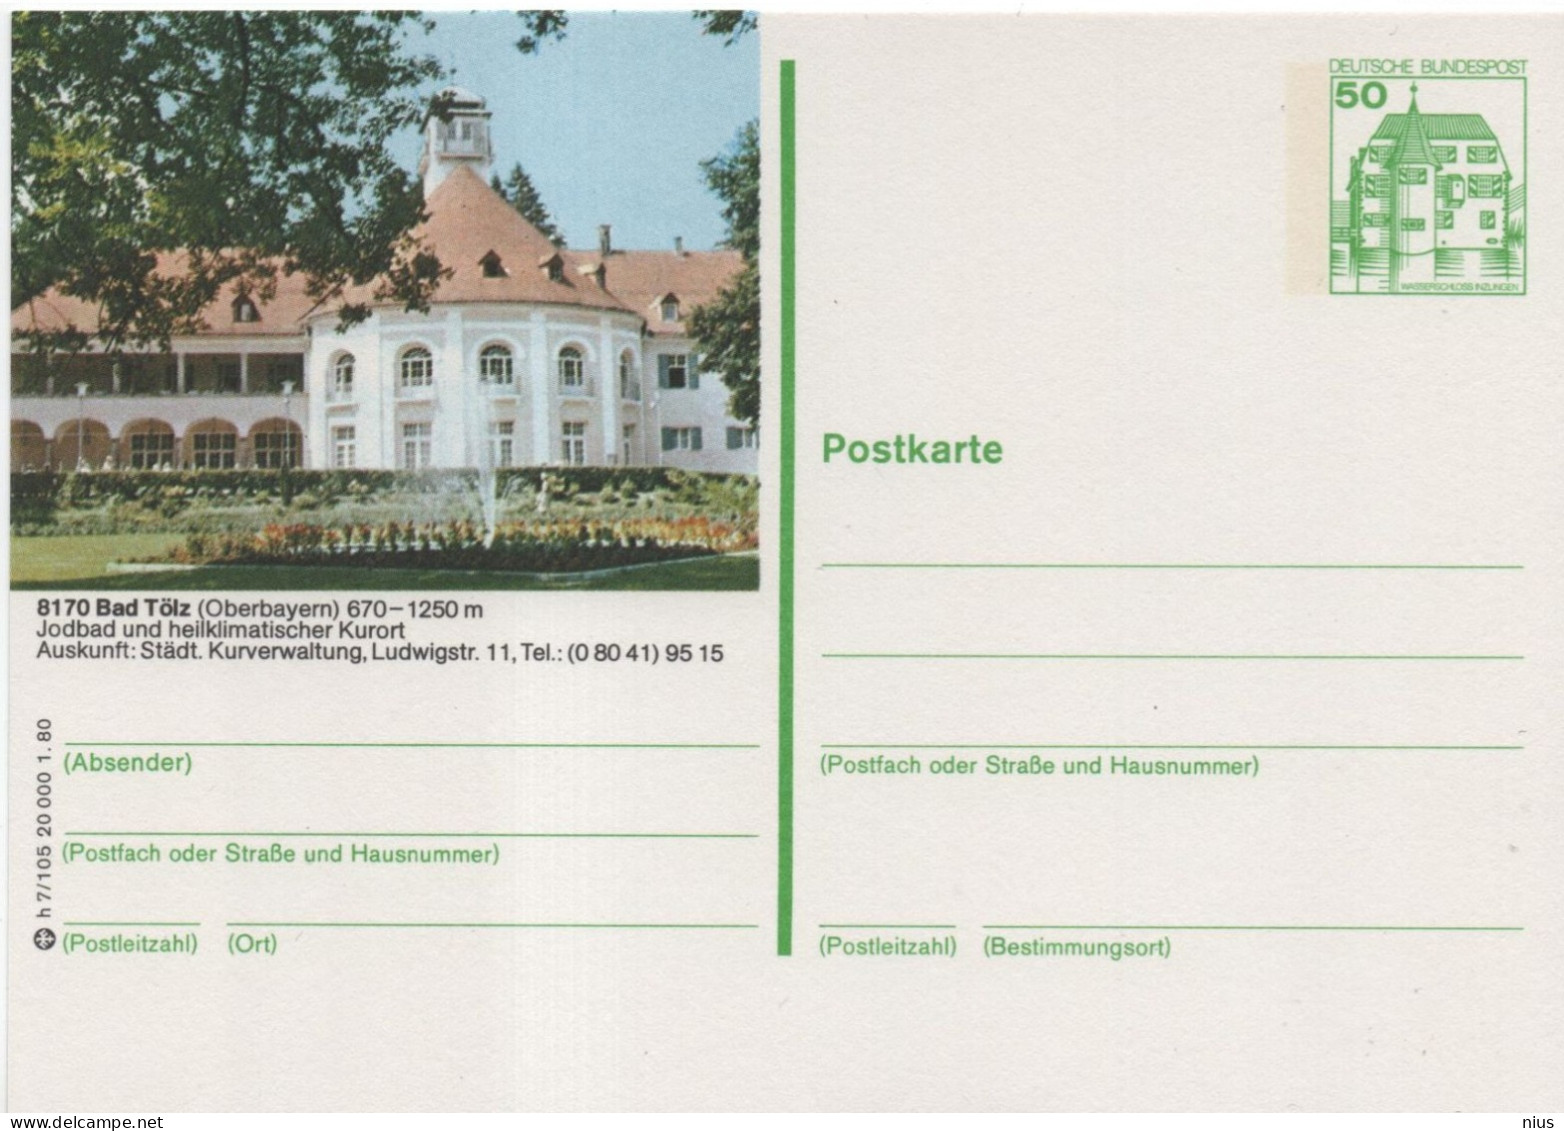 Germany Deutschland 1980 Bad Tolz, Oberbayern - Postcards - Mint